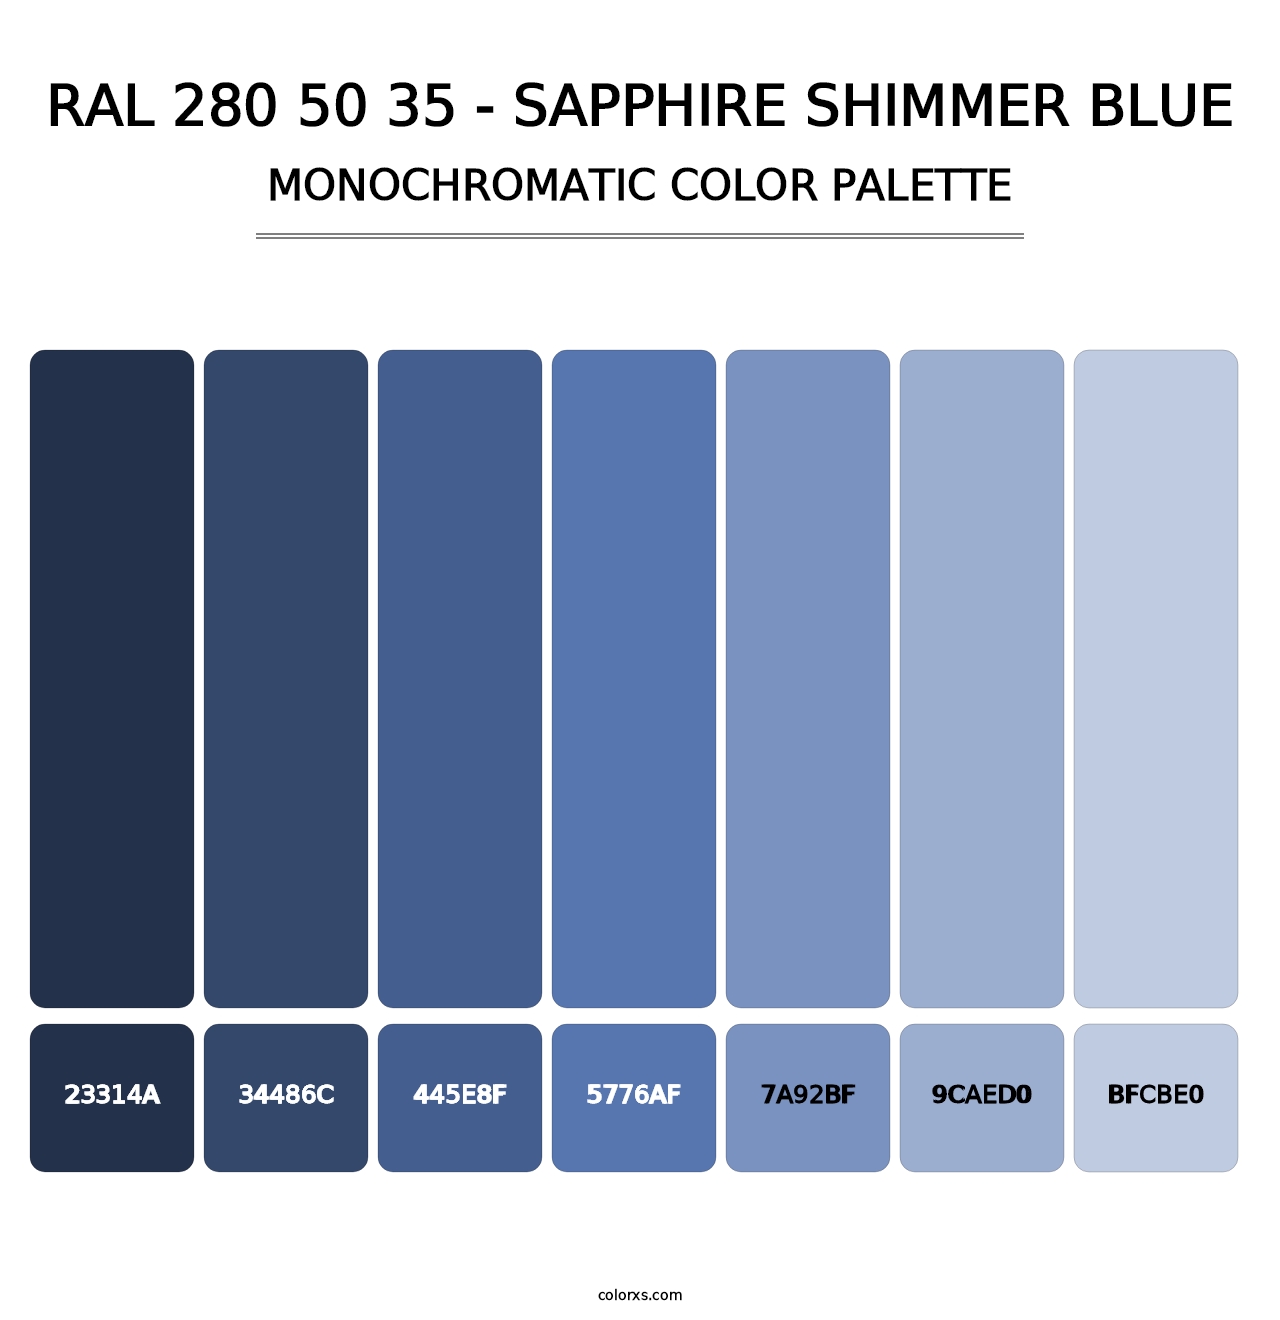 RAL 280 50 35 - Sapphire Shimmer Blue - Monochromatic Color Palette